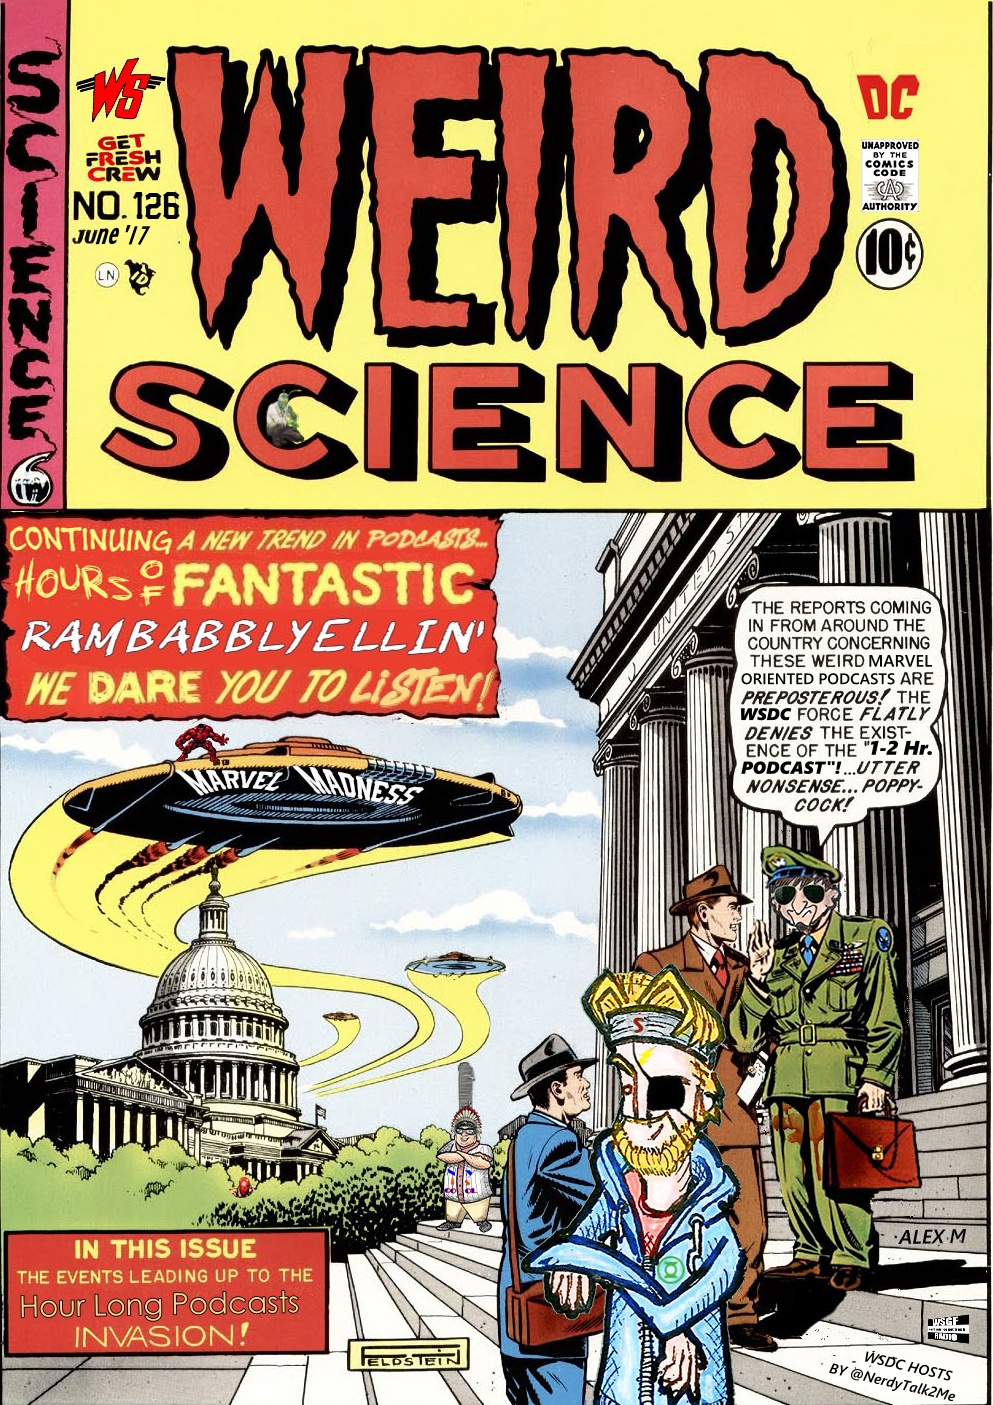 Secret Invasion #5 Review – Weird Science Marvel Comics